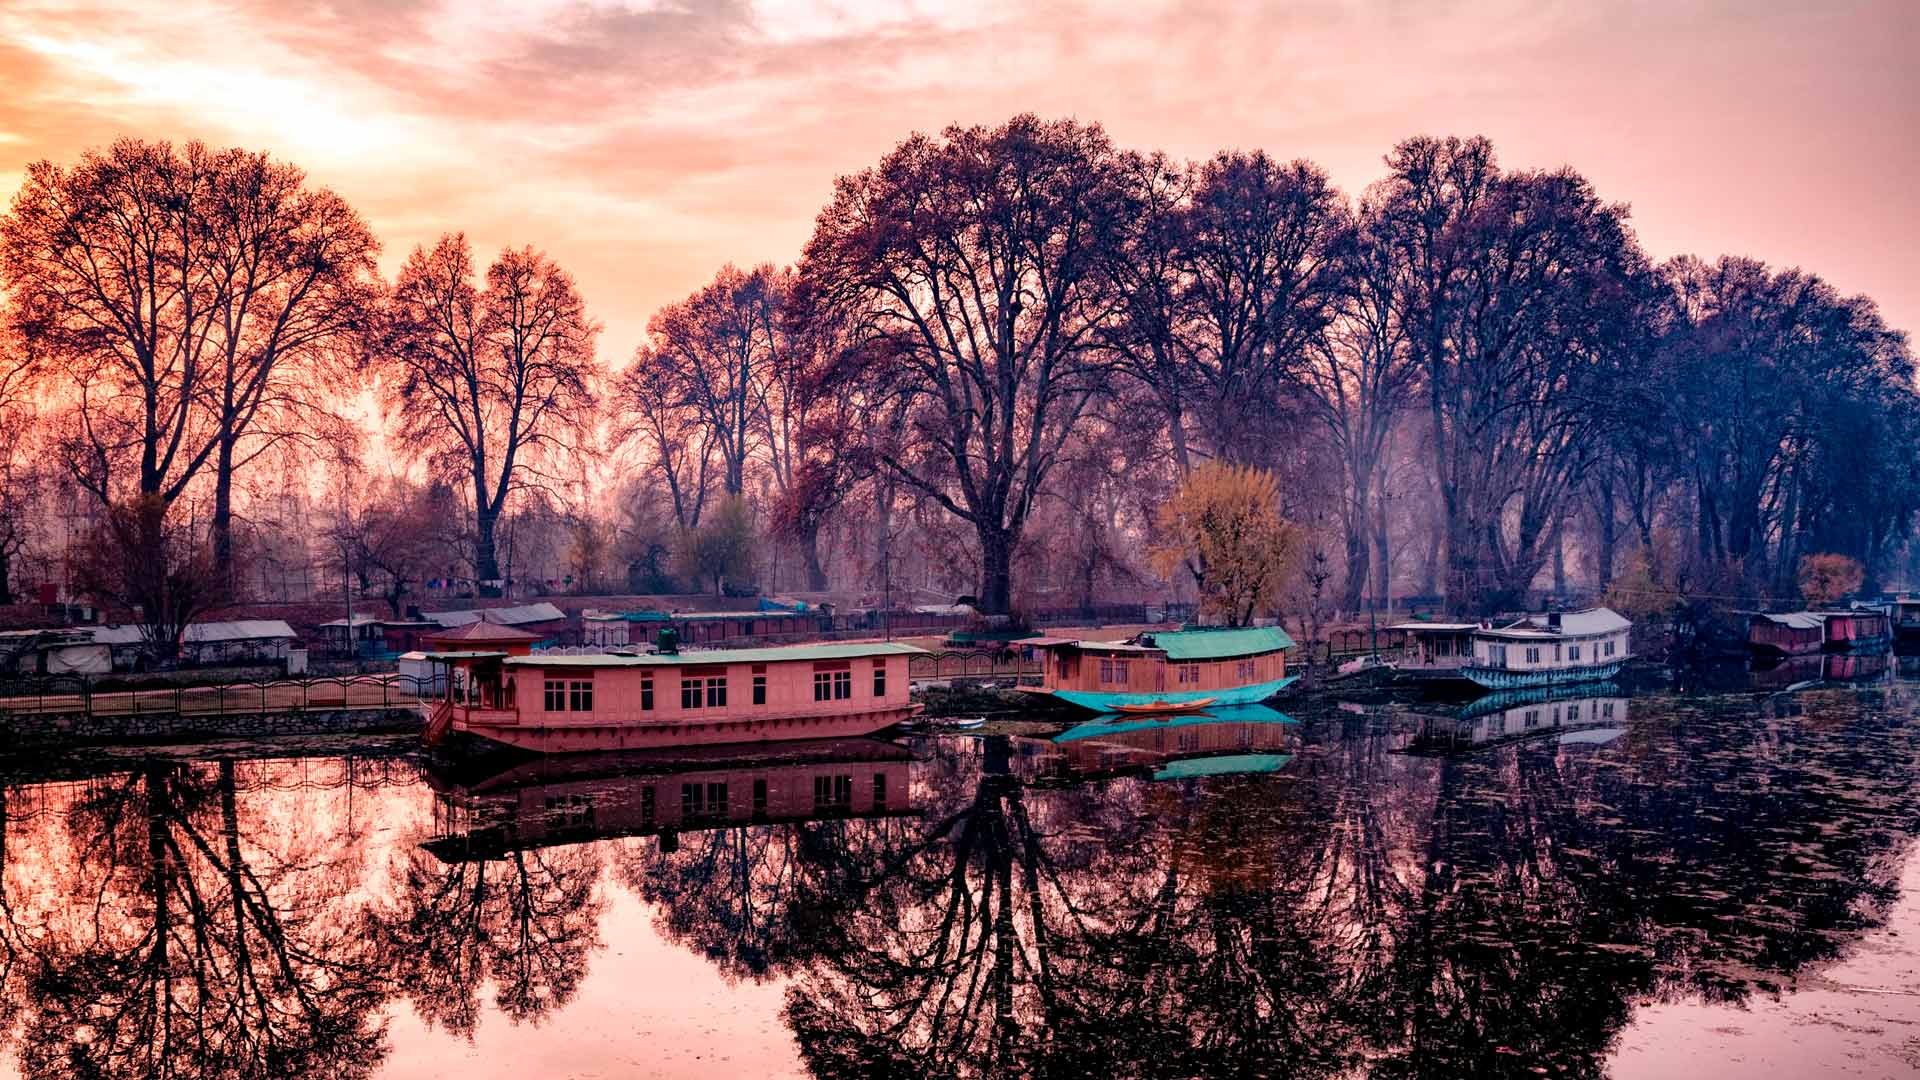 Houseboat images, Srinagar